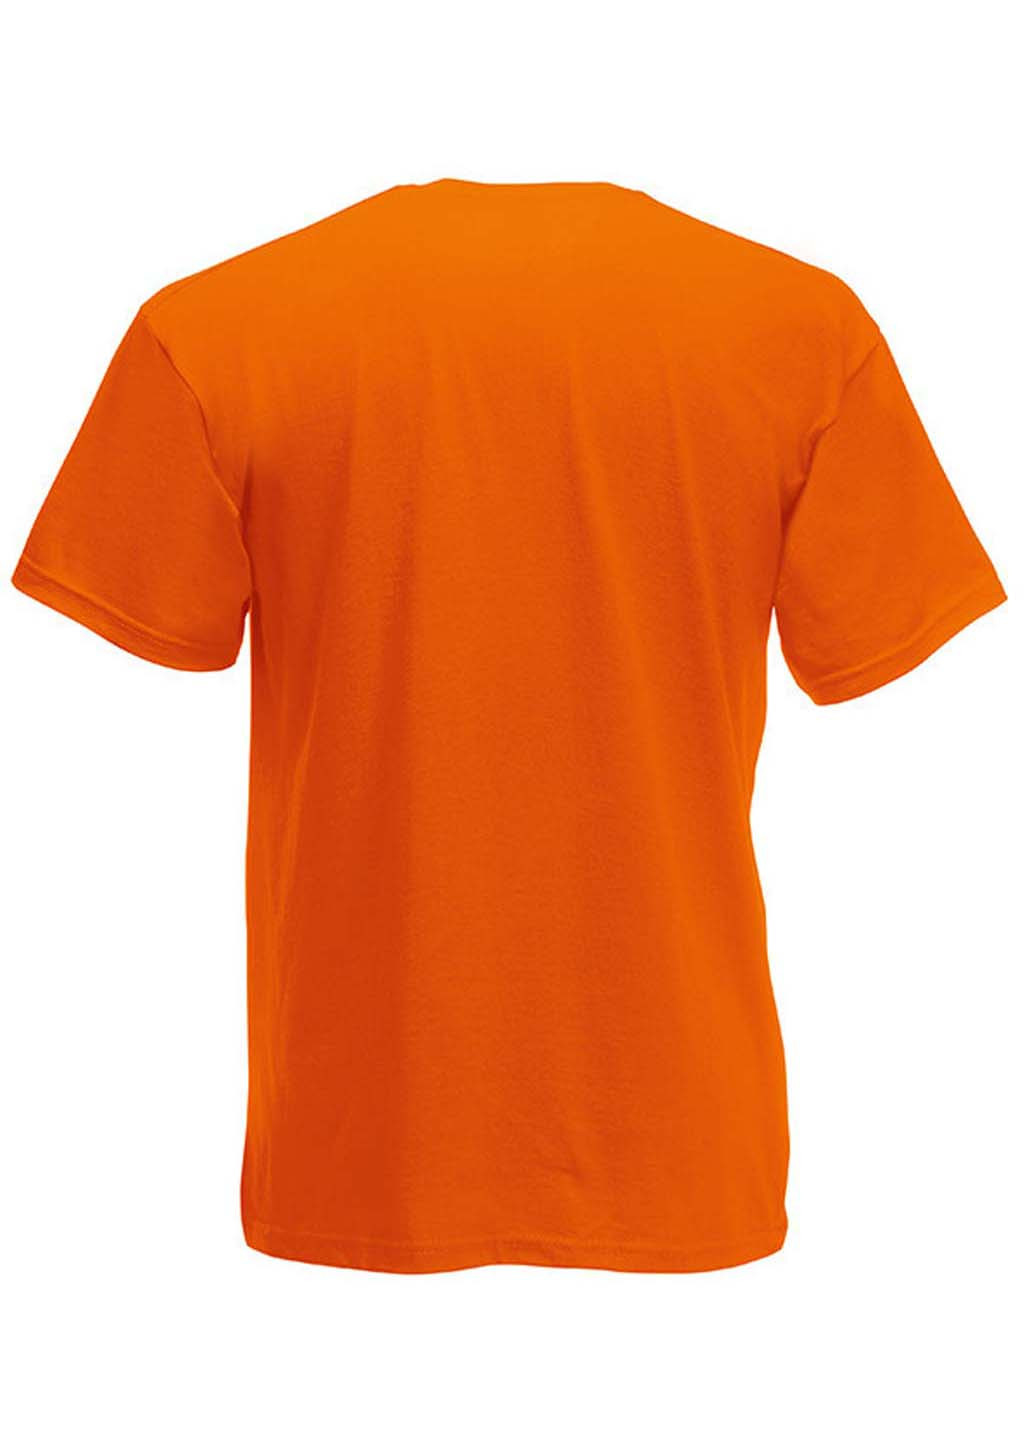 Оранжевая футболка Fruit of the Loom ValueWeight